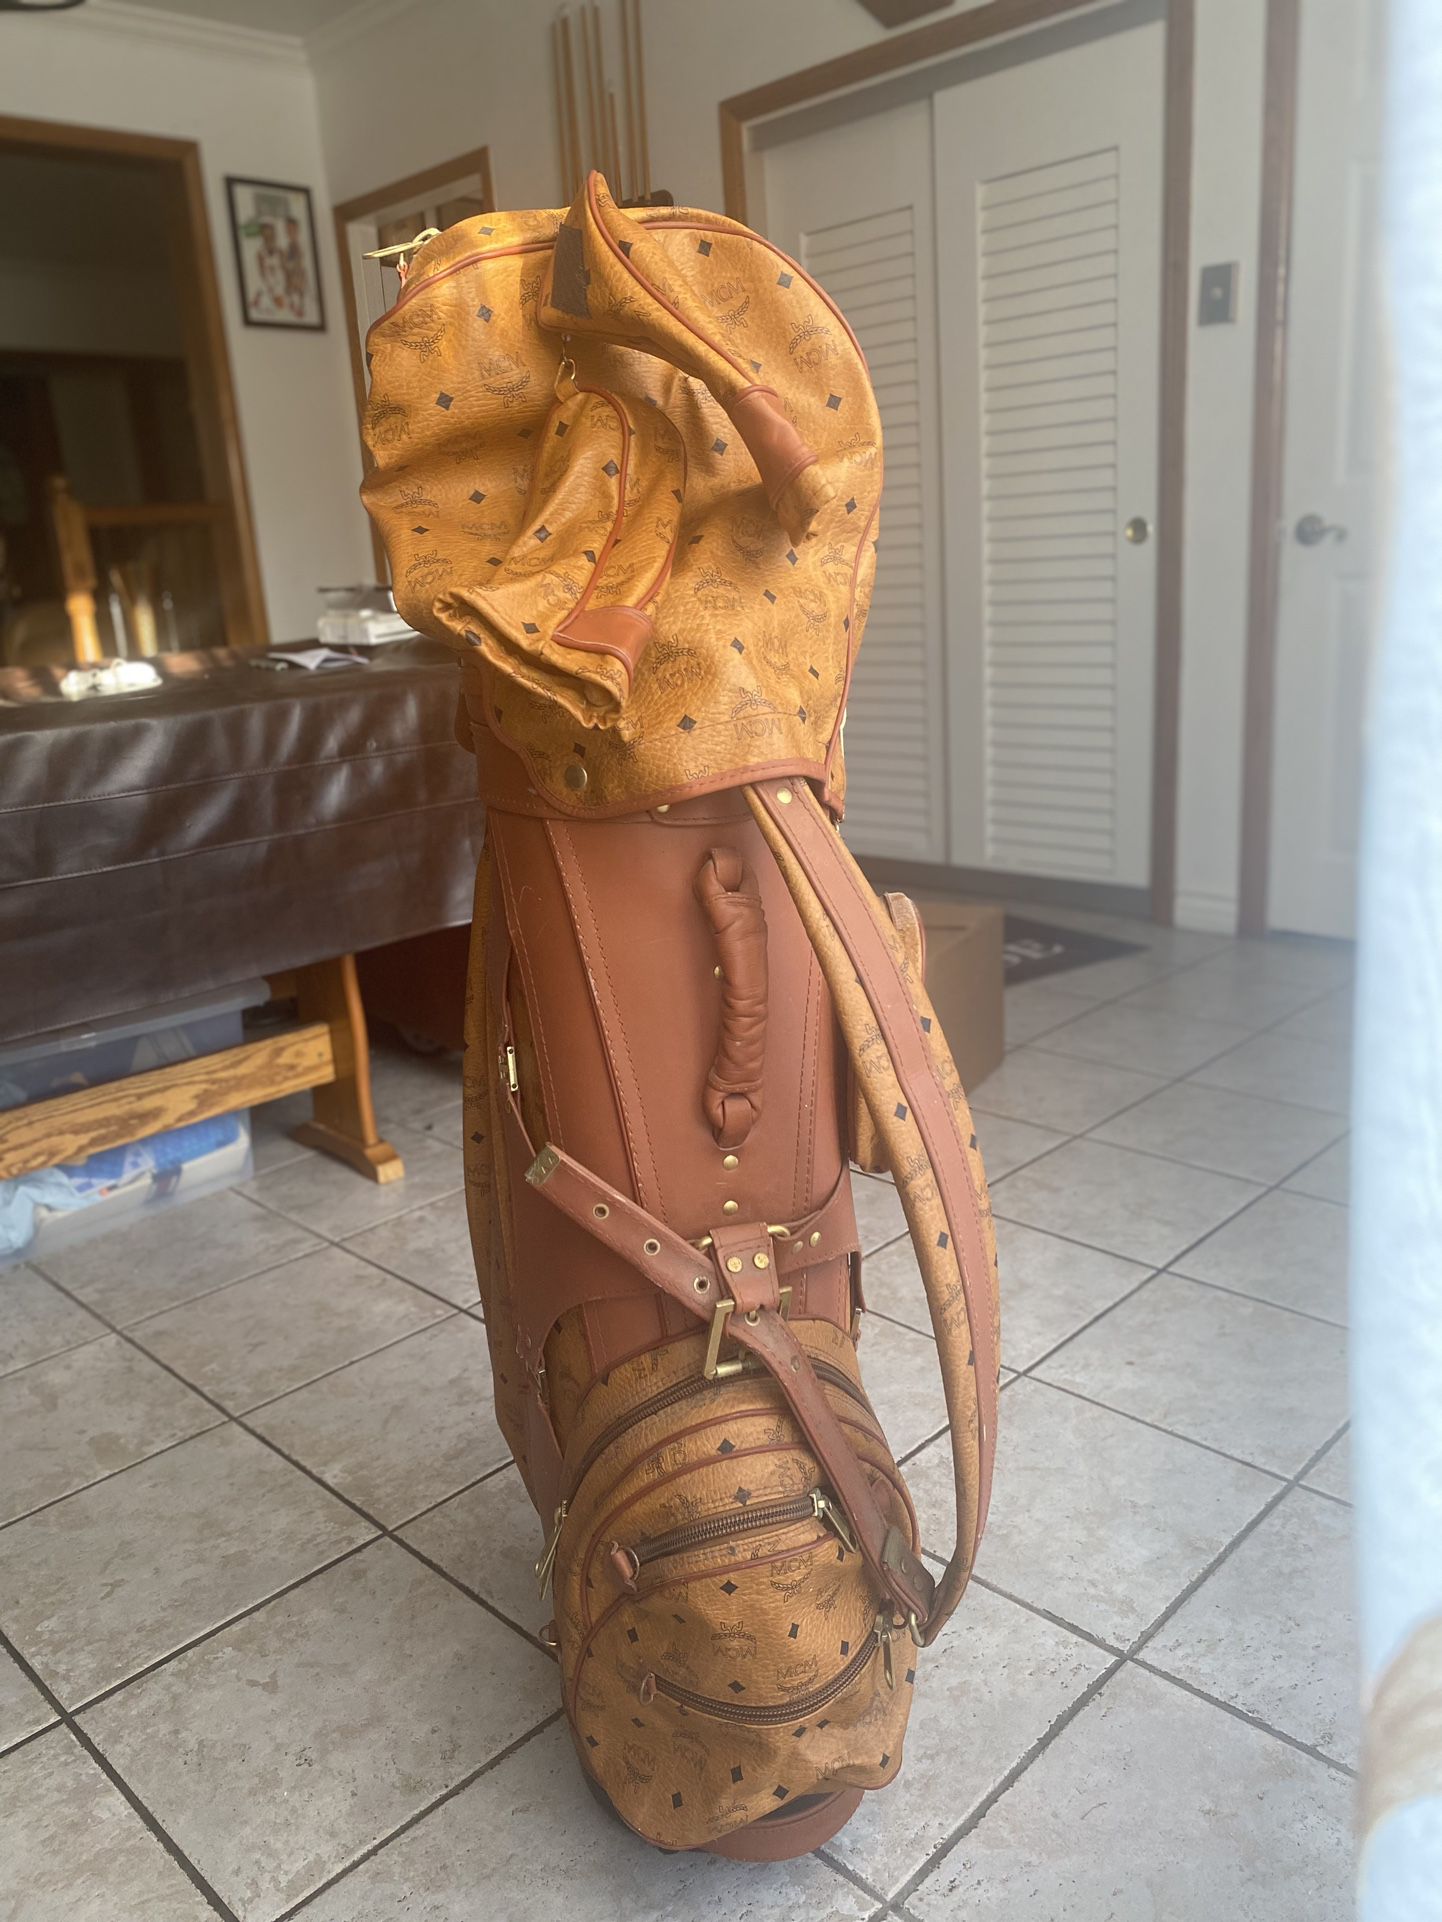 MCM Cognac Visetos Coated Canvas Golf Bag for Sale in Gardena, CA